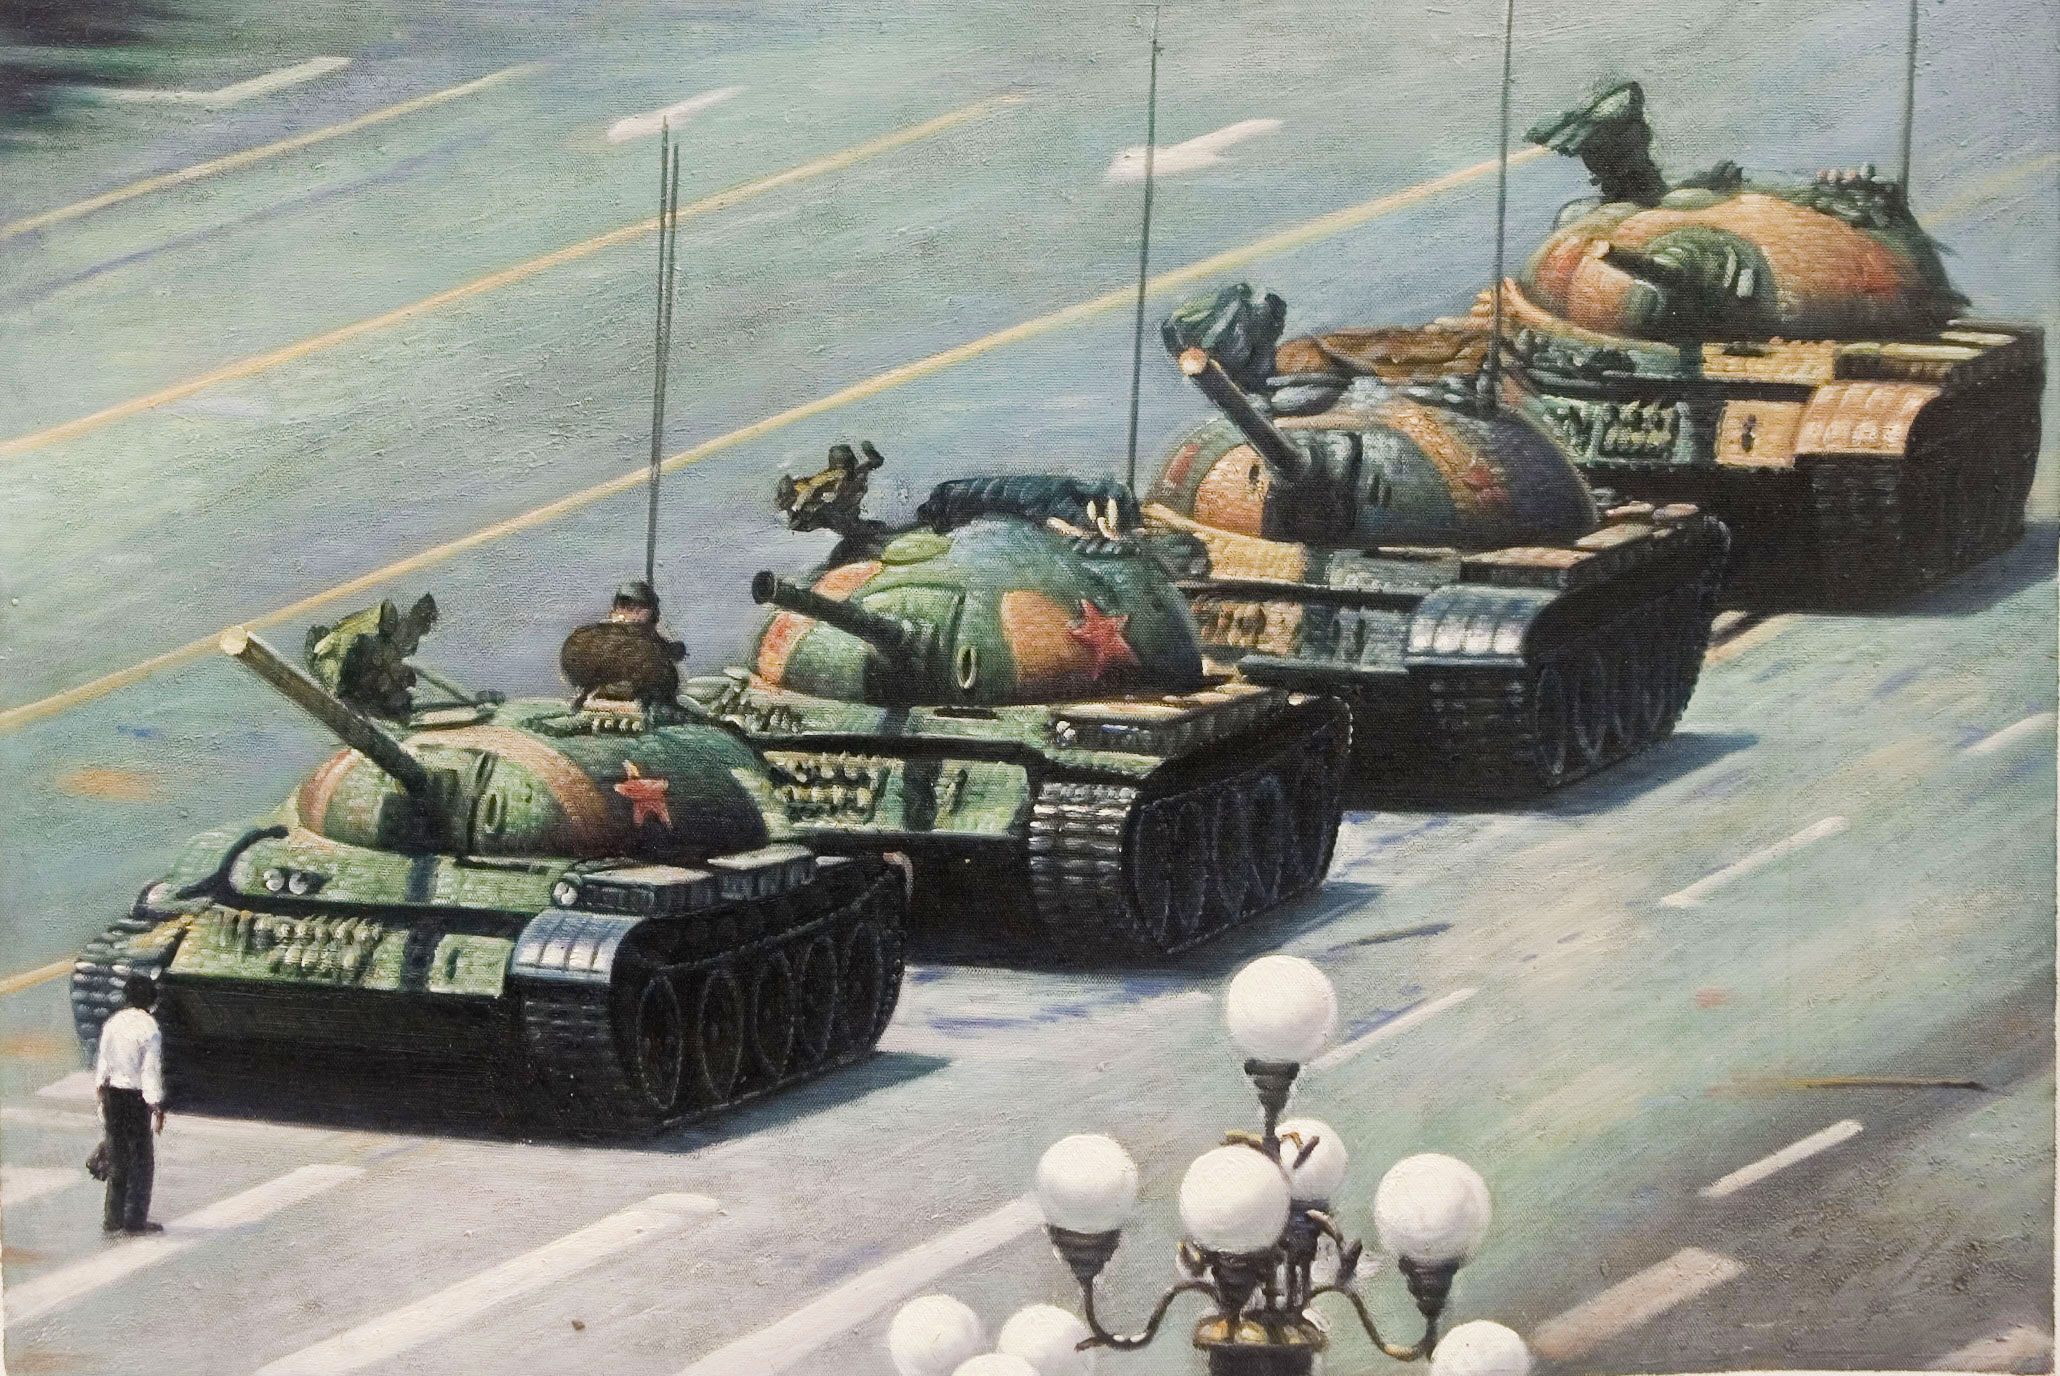 History Repeats Itself – Tiananmen Square